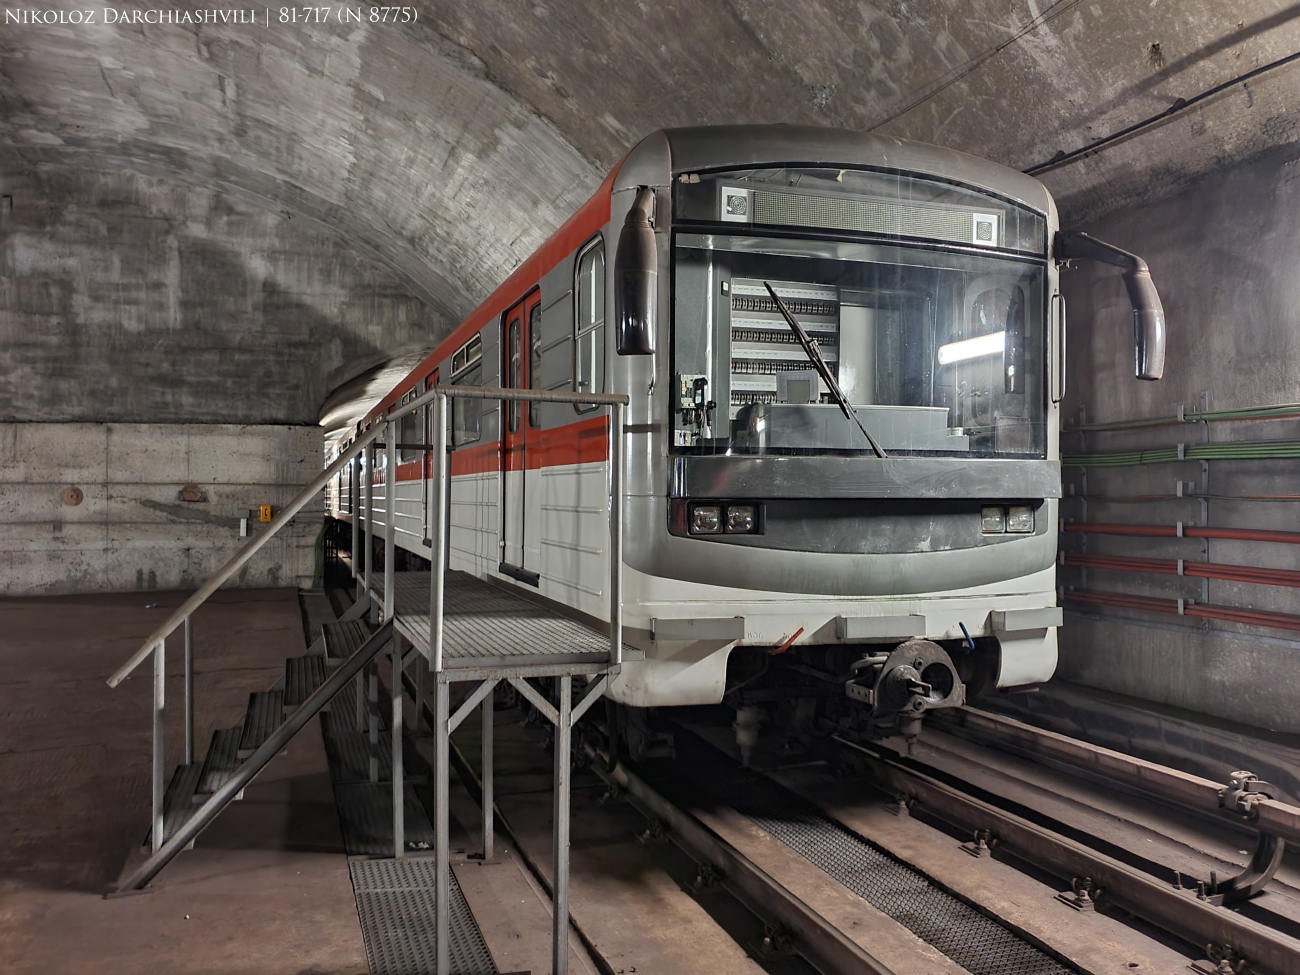 Тбилиси, 81-717M № 8775; Тбилиси — Метрополитен